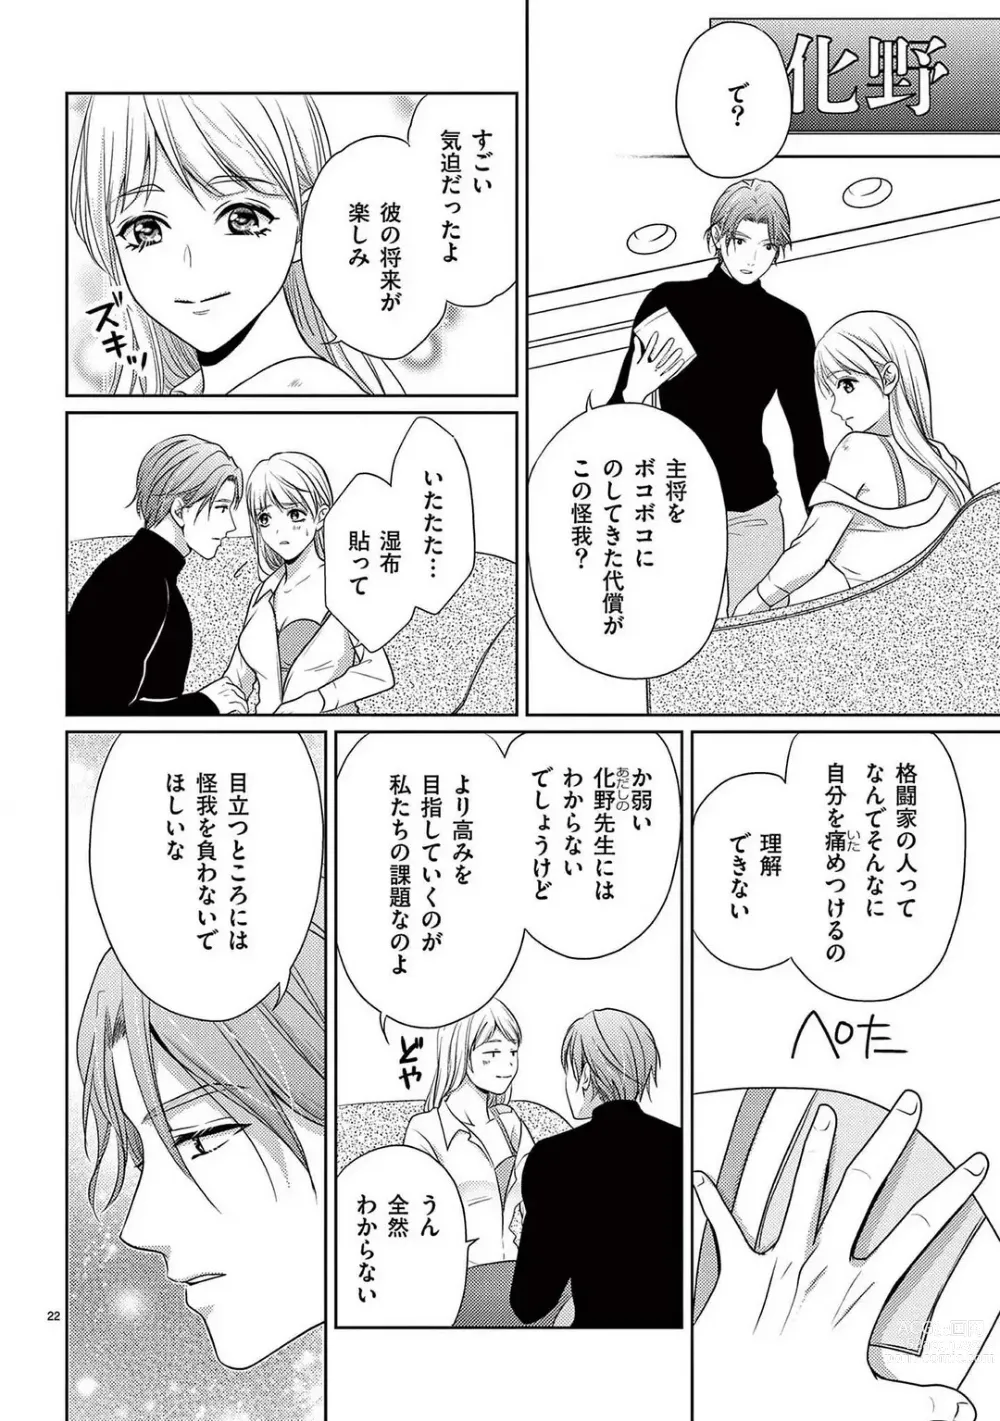 Page 183 of manga Sono Ase, Sekkusu Pafuyūmu. 〜 Sutte, Kisushite, Musabotte~Chp.1-7